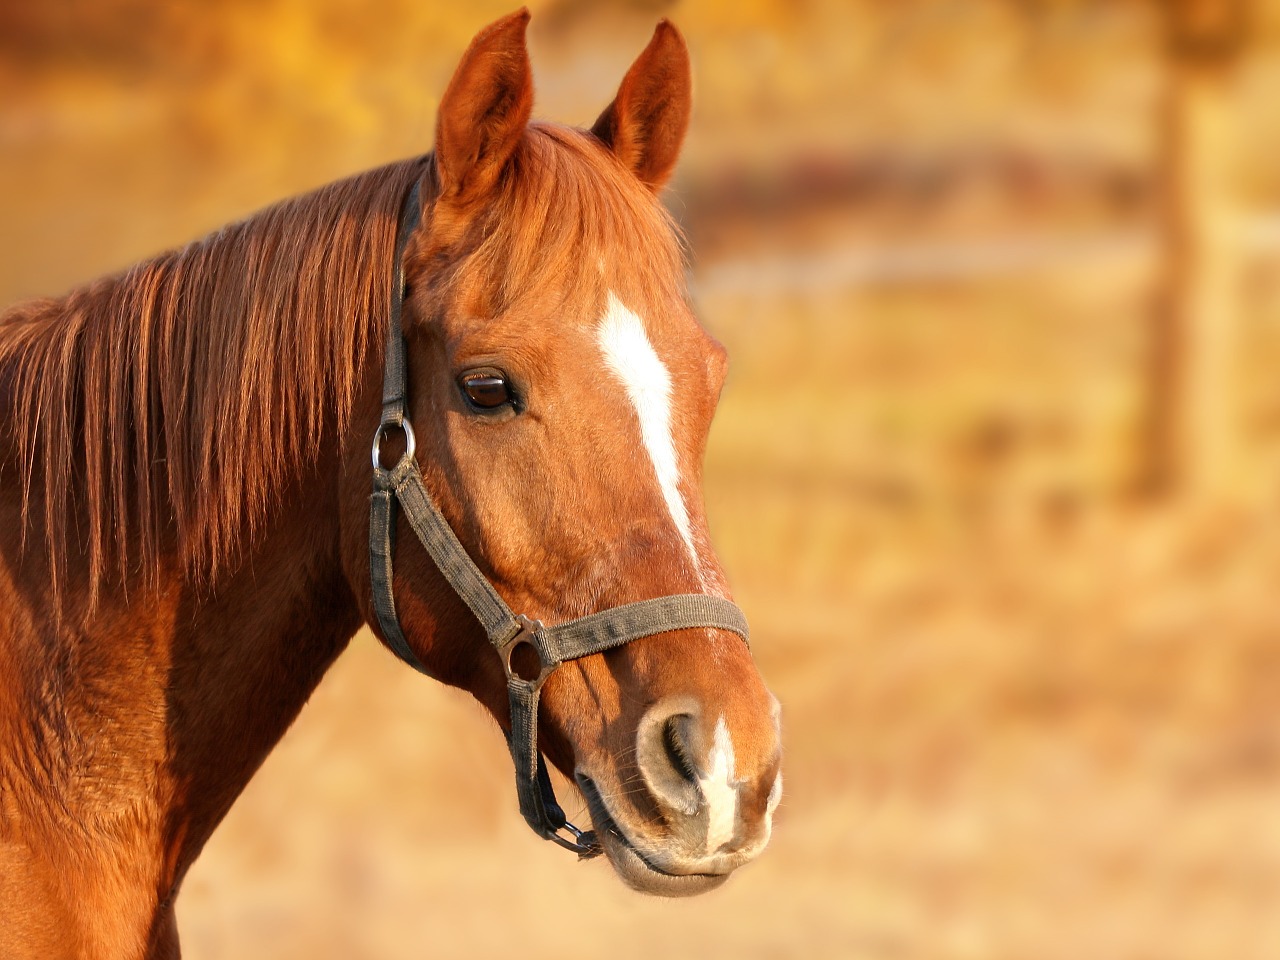 Image - horse brown animal portrait